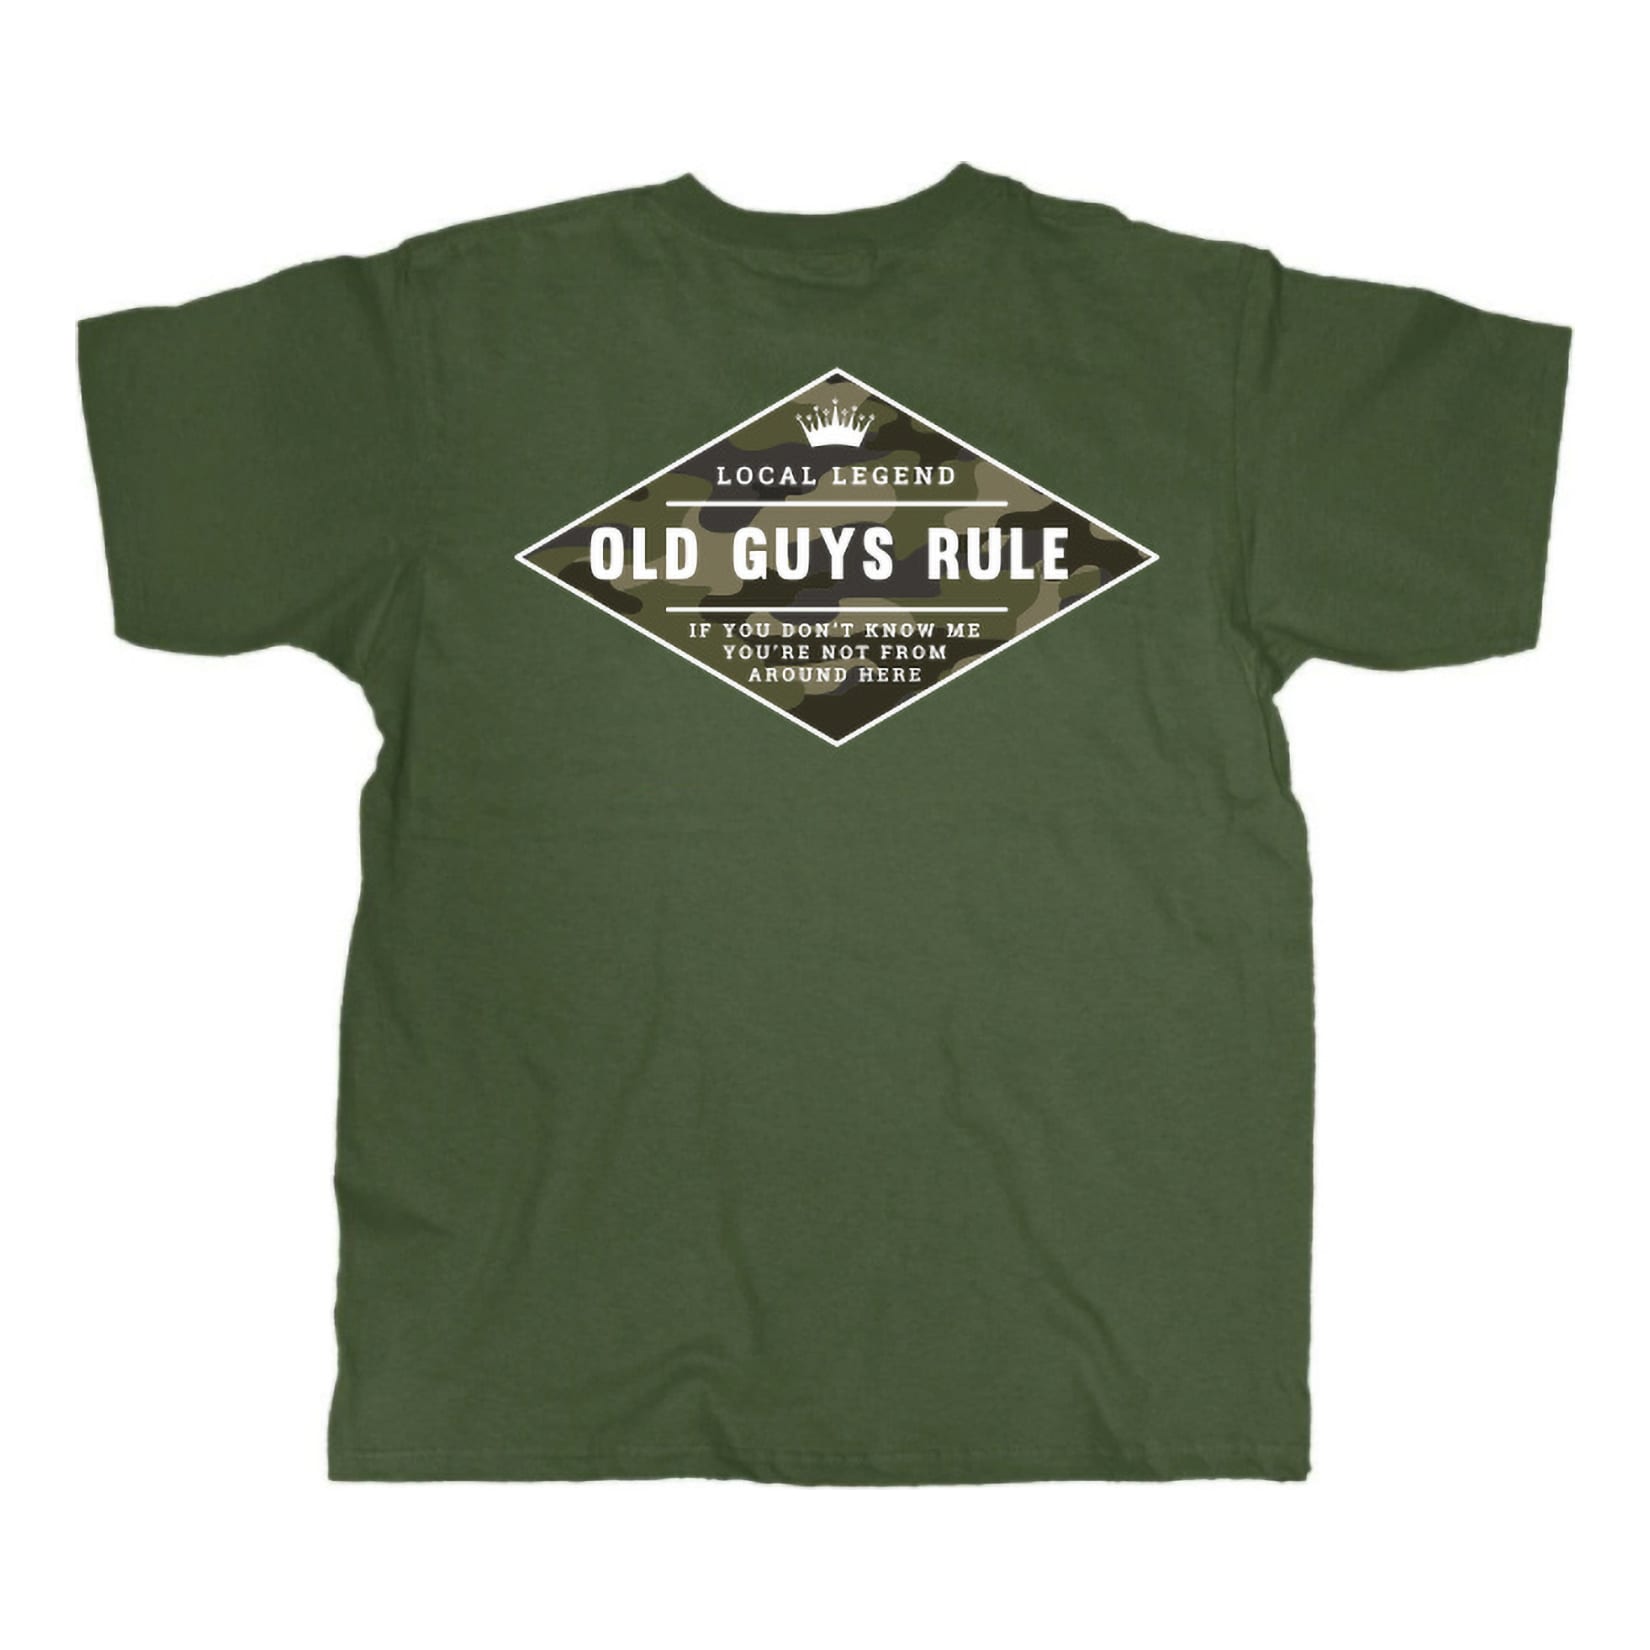 Old Guys Rule® Local Legend Camo Short-Sleeve T-Shirt - Green